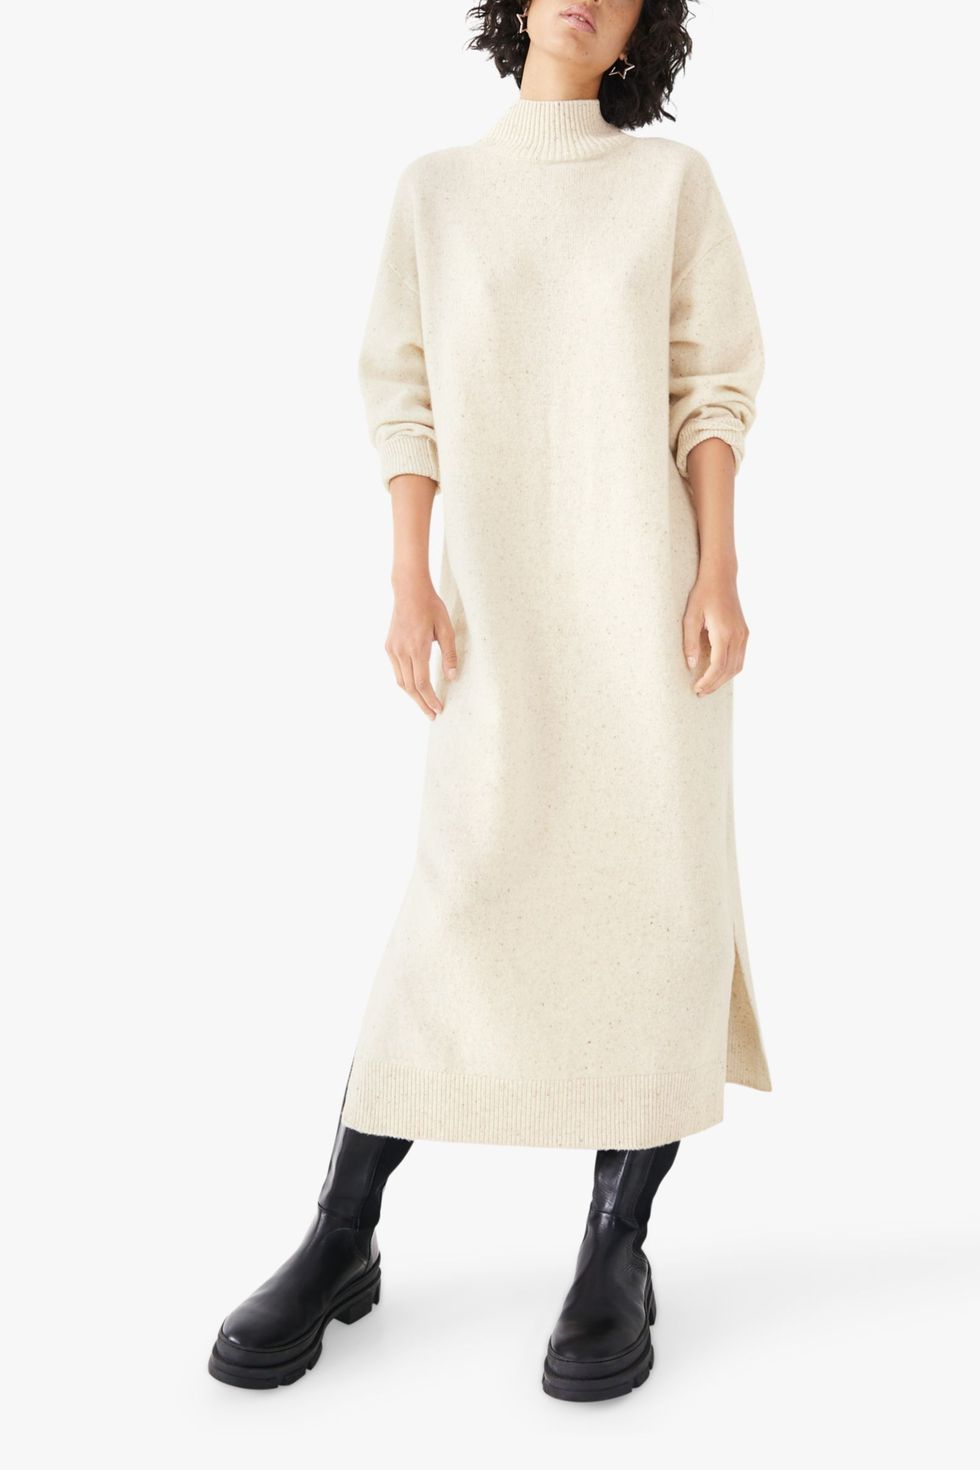 hush Cate Knitted Wool Dress, Ecru